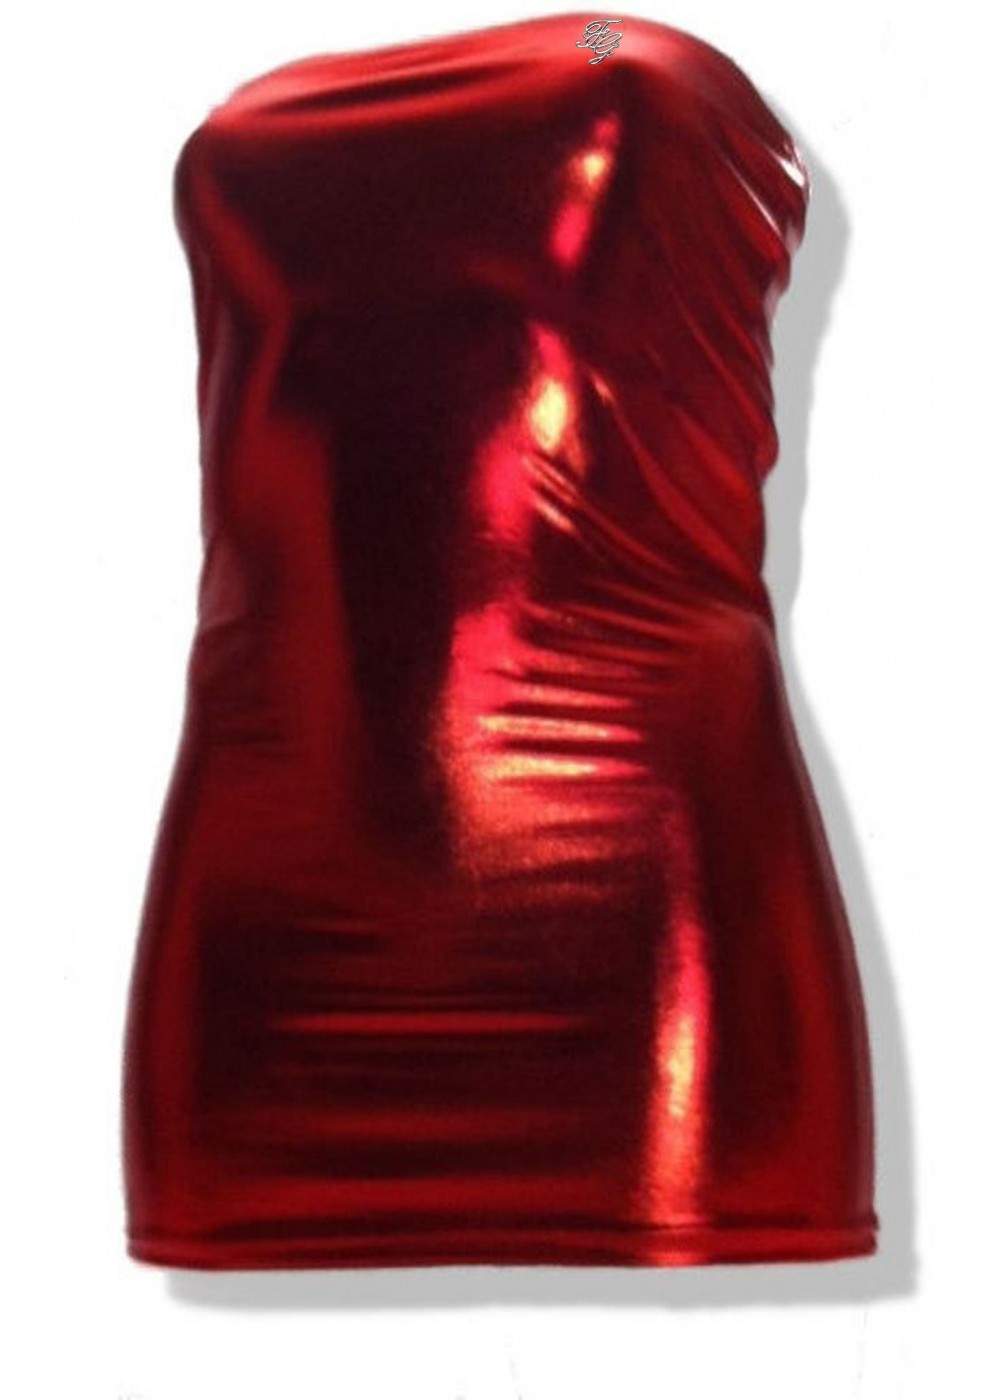 Hammer Wetlook Gogo Bandeau Dress Red Sizes 44 - 52 Many Lengths 25... - 